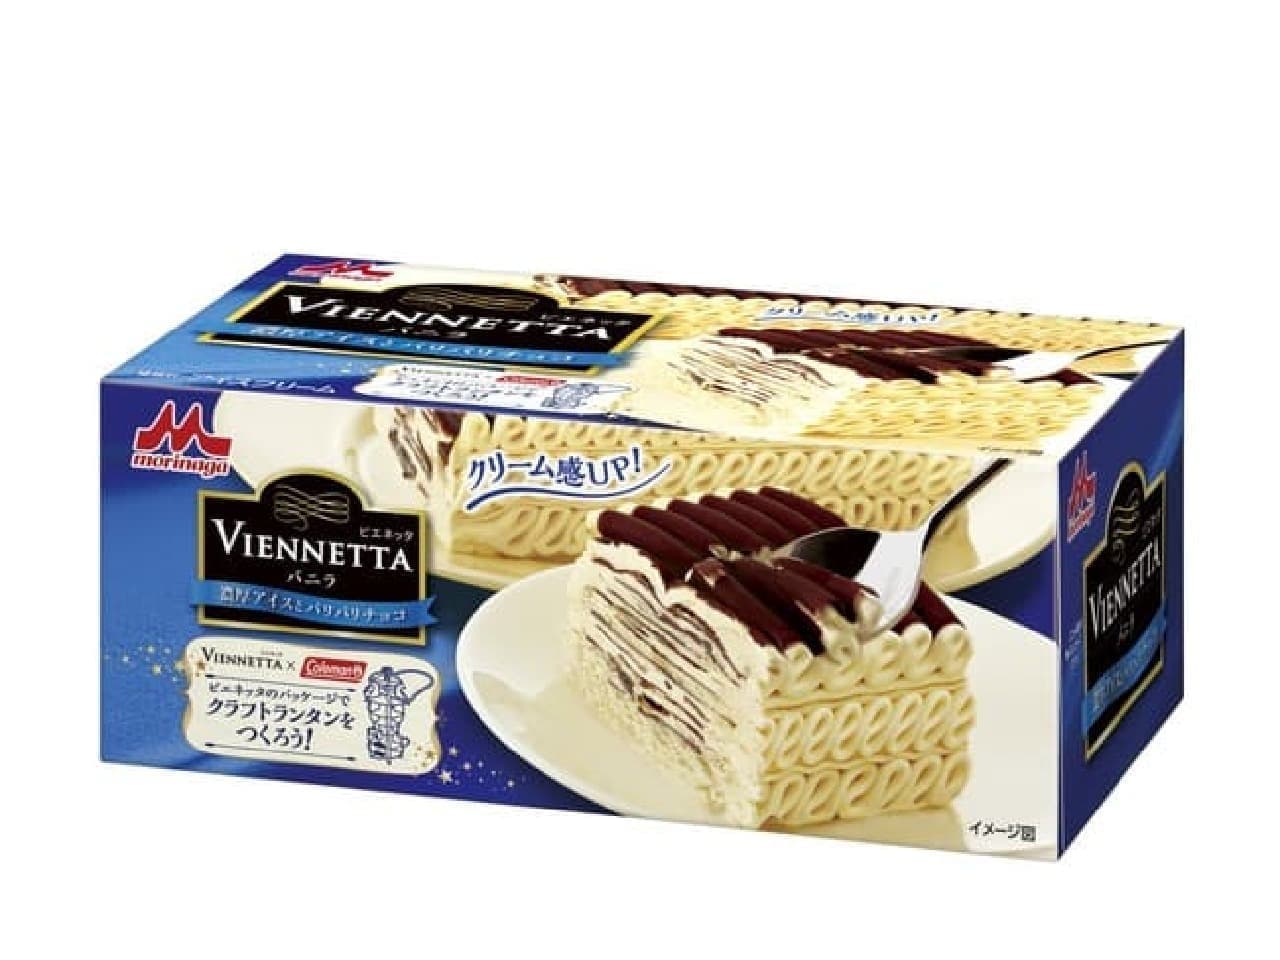 "Viennetta Vanilla" "Viennetta Tiramisu" renewal